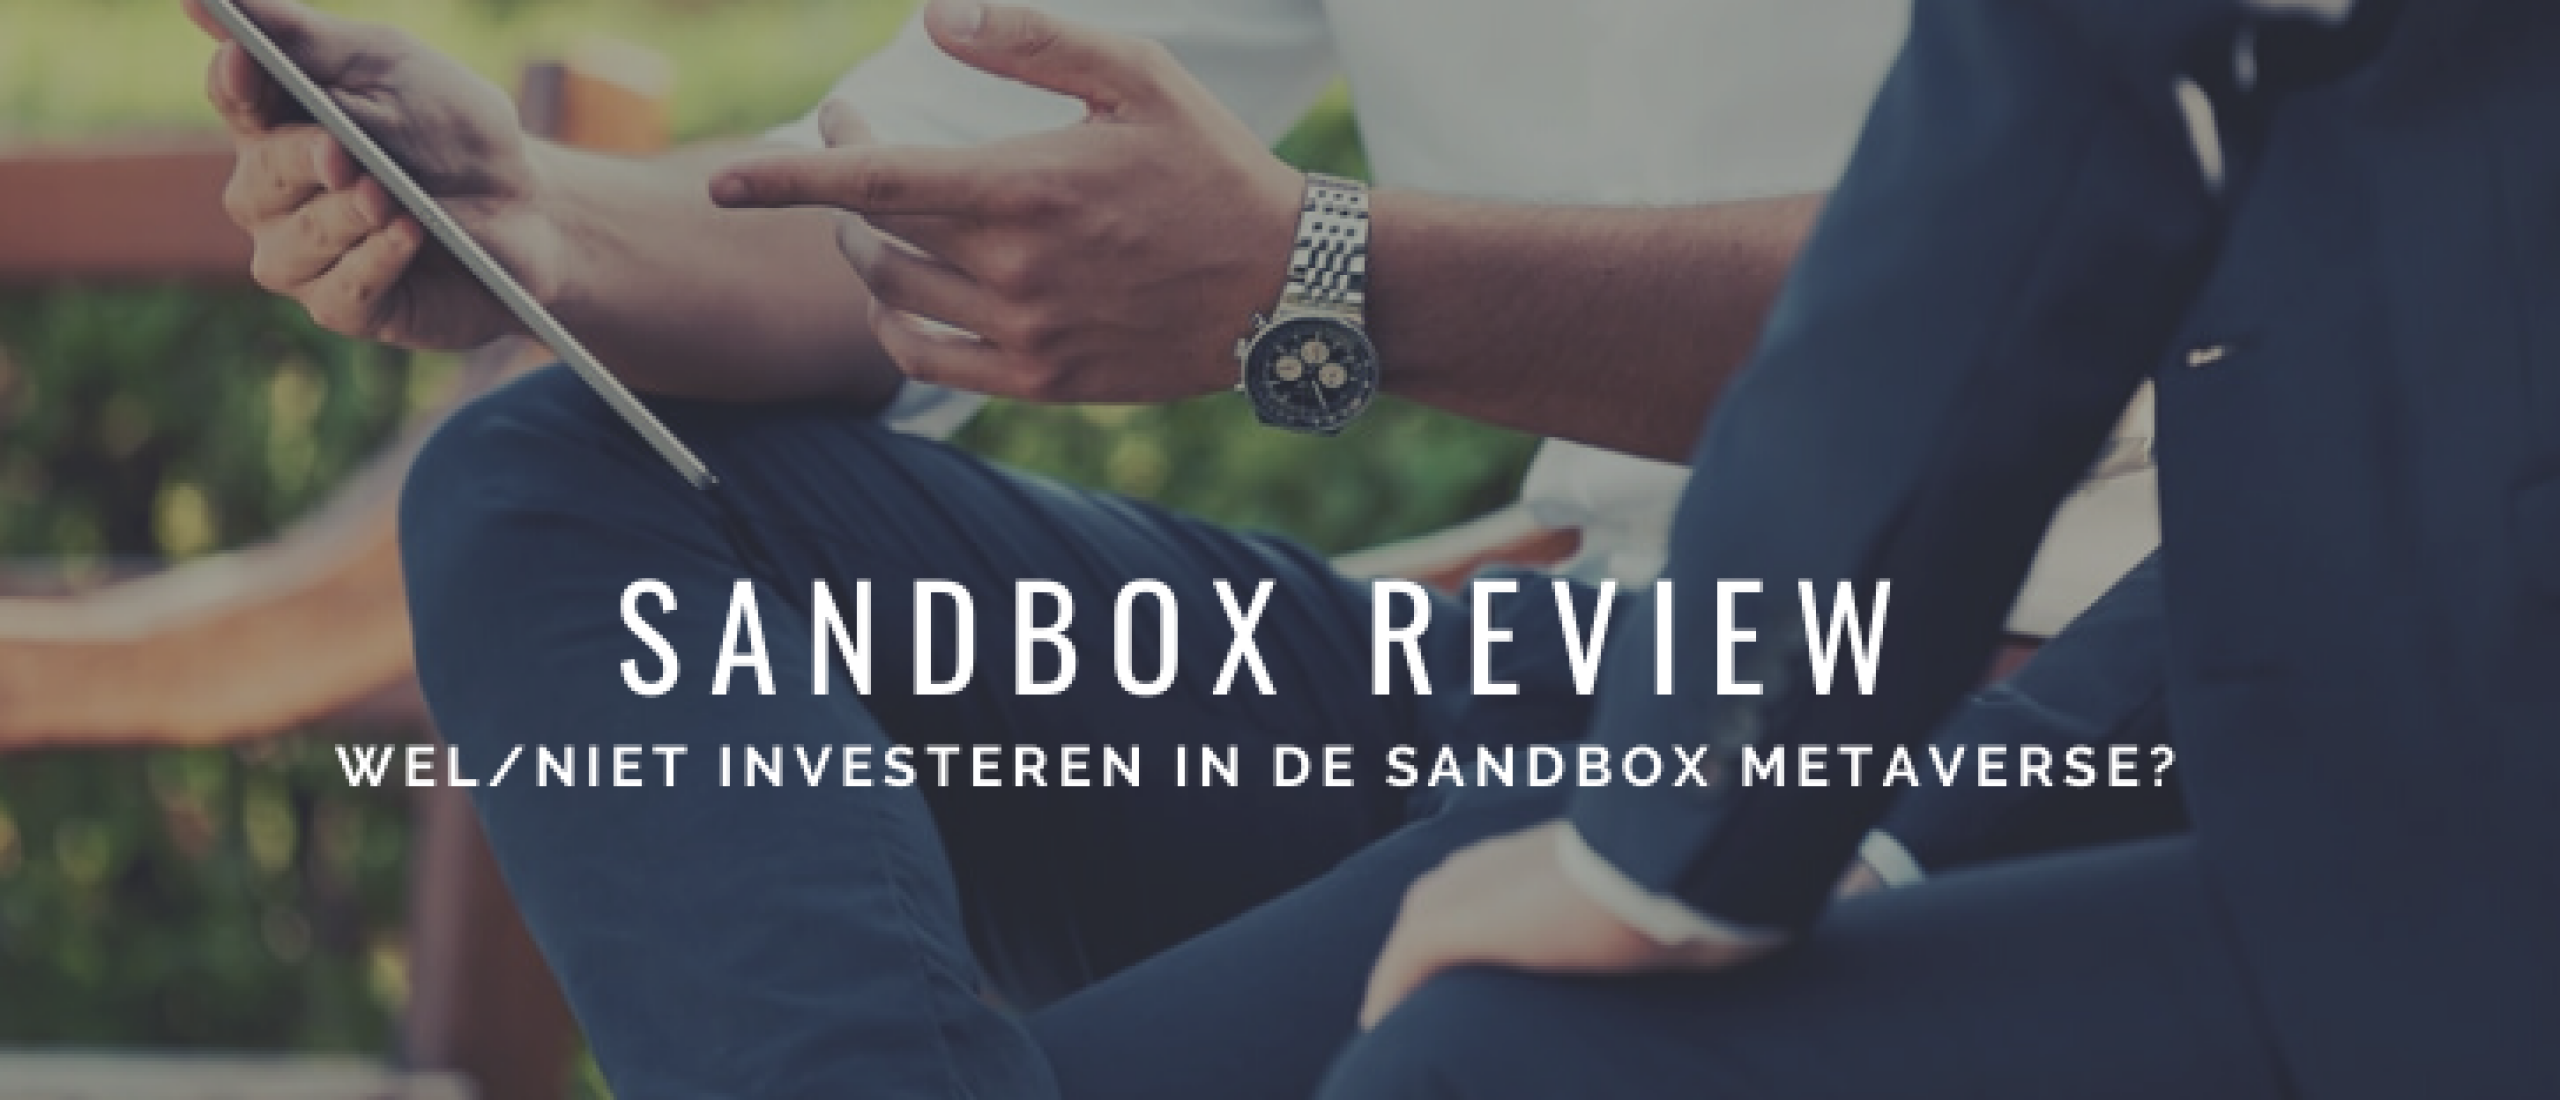 Sandbox Metaverse Review: Wel/Niet Investeren in Sandbox?